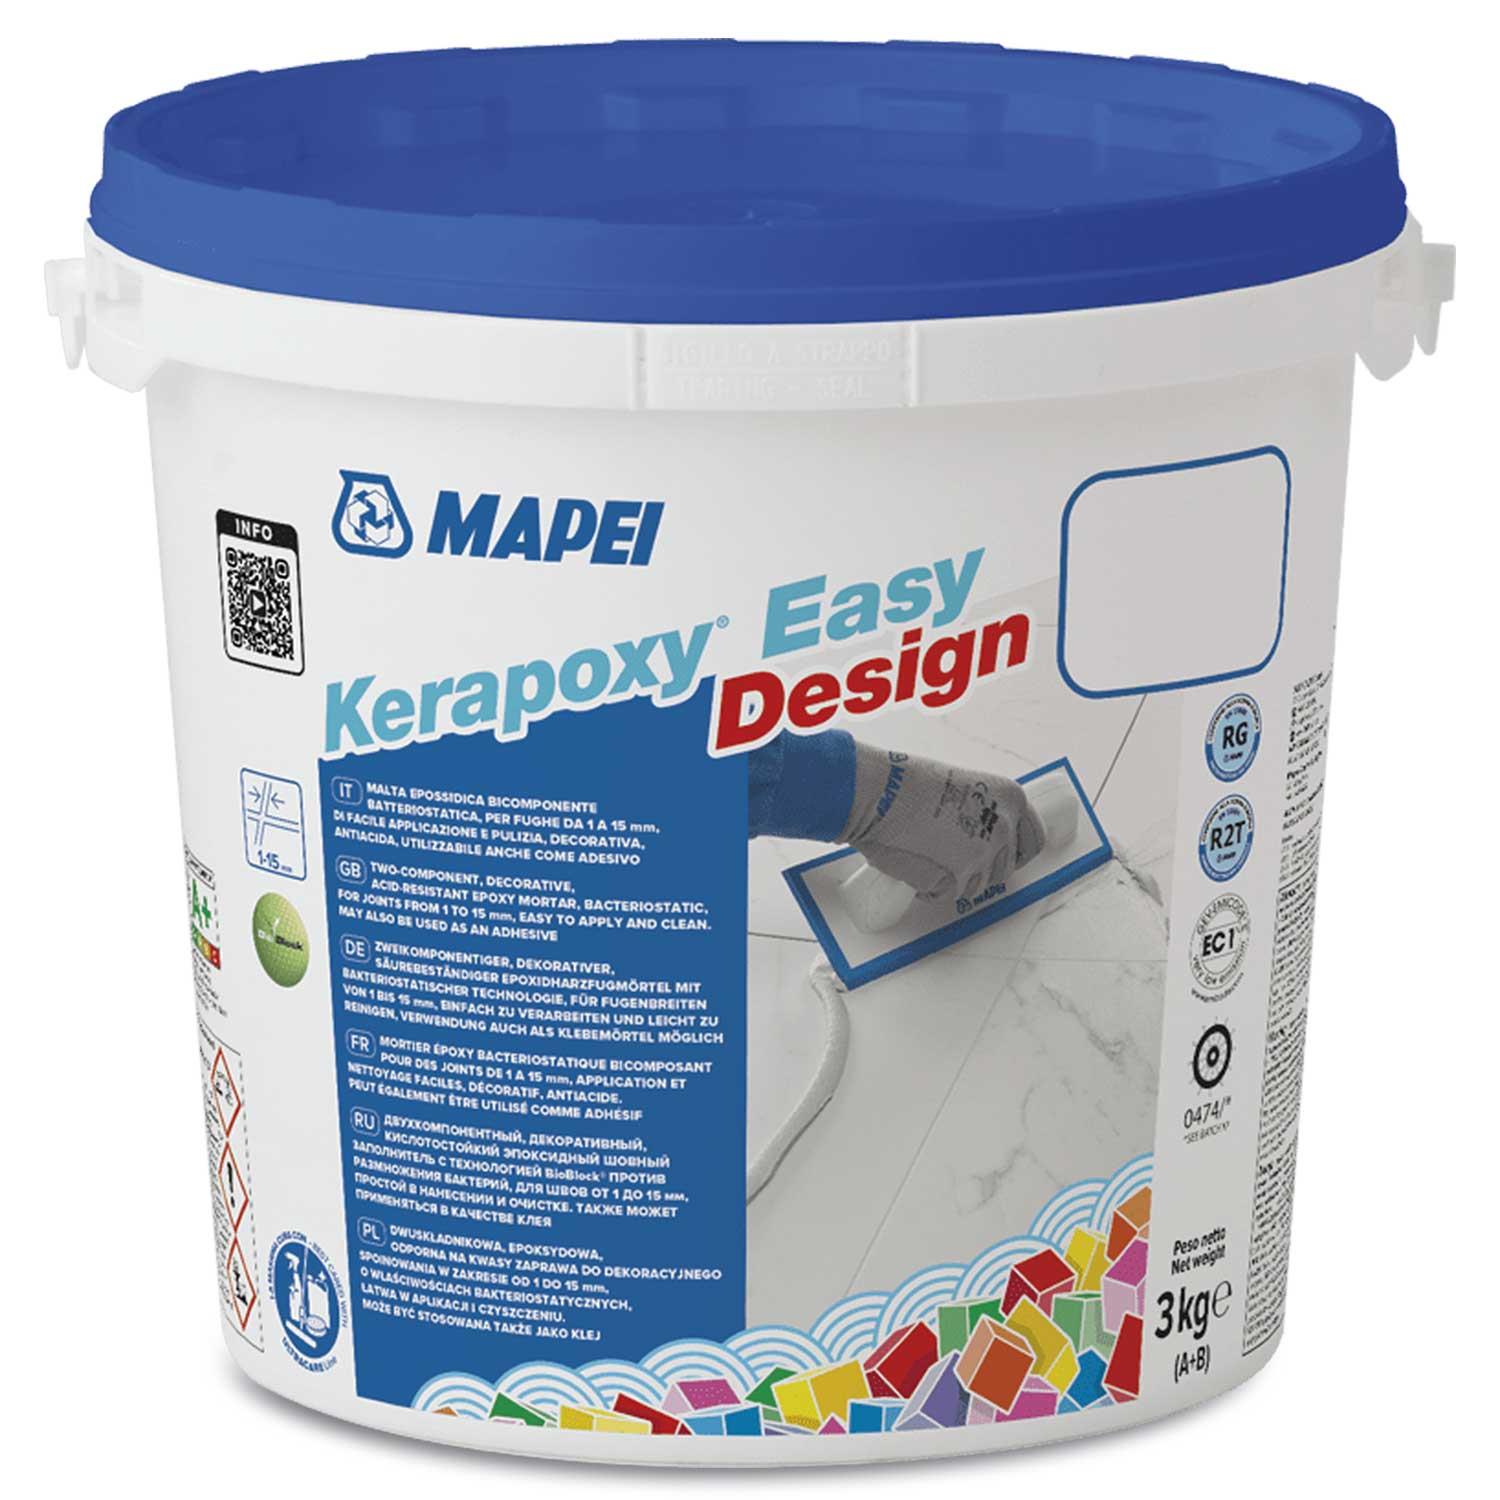 Mapei Kerapoxy Easy Design Expoxy Grout 3KG